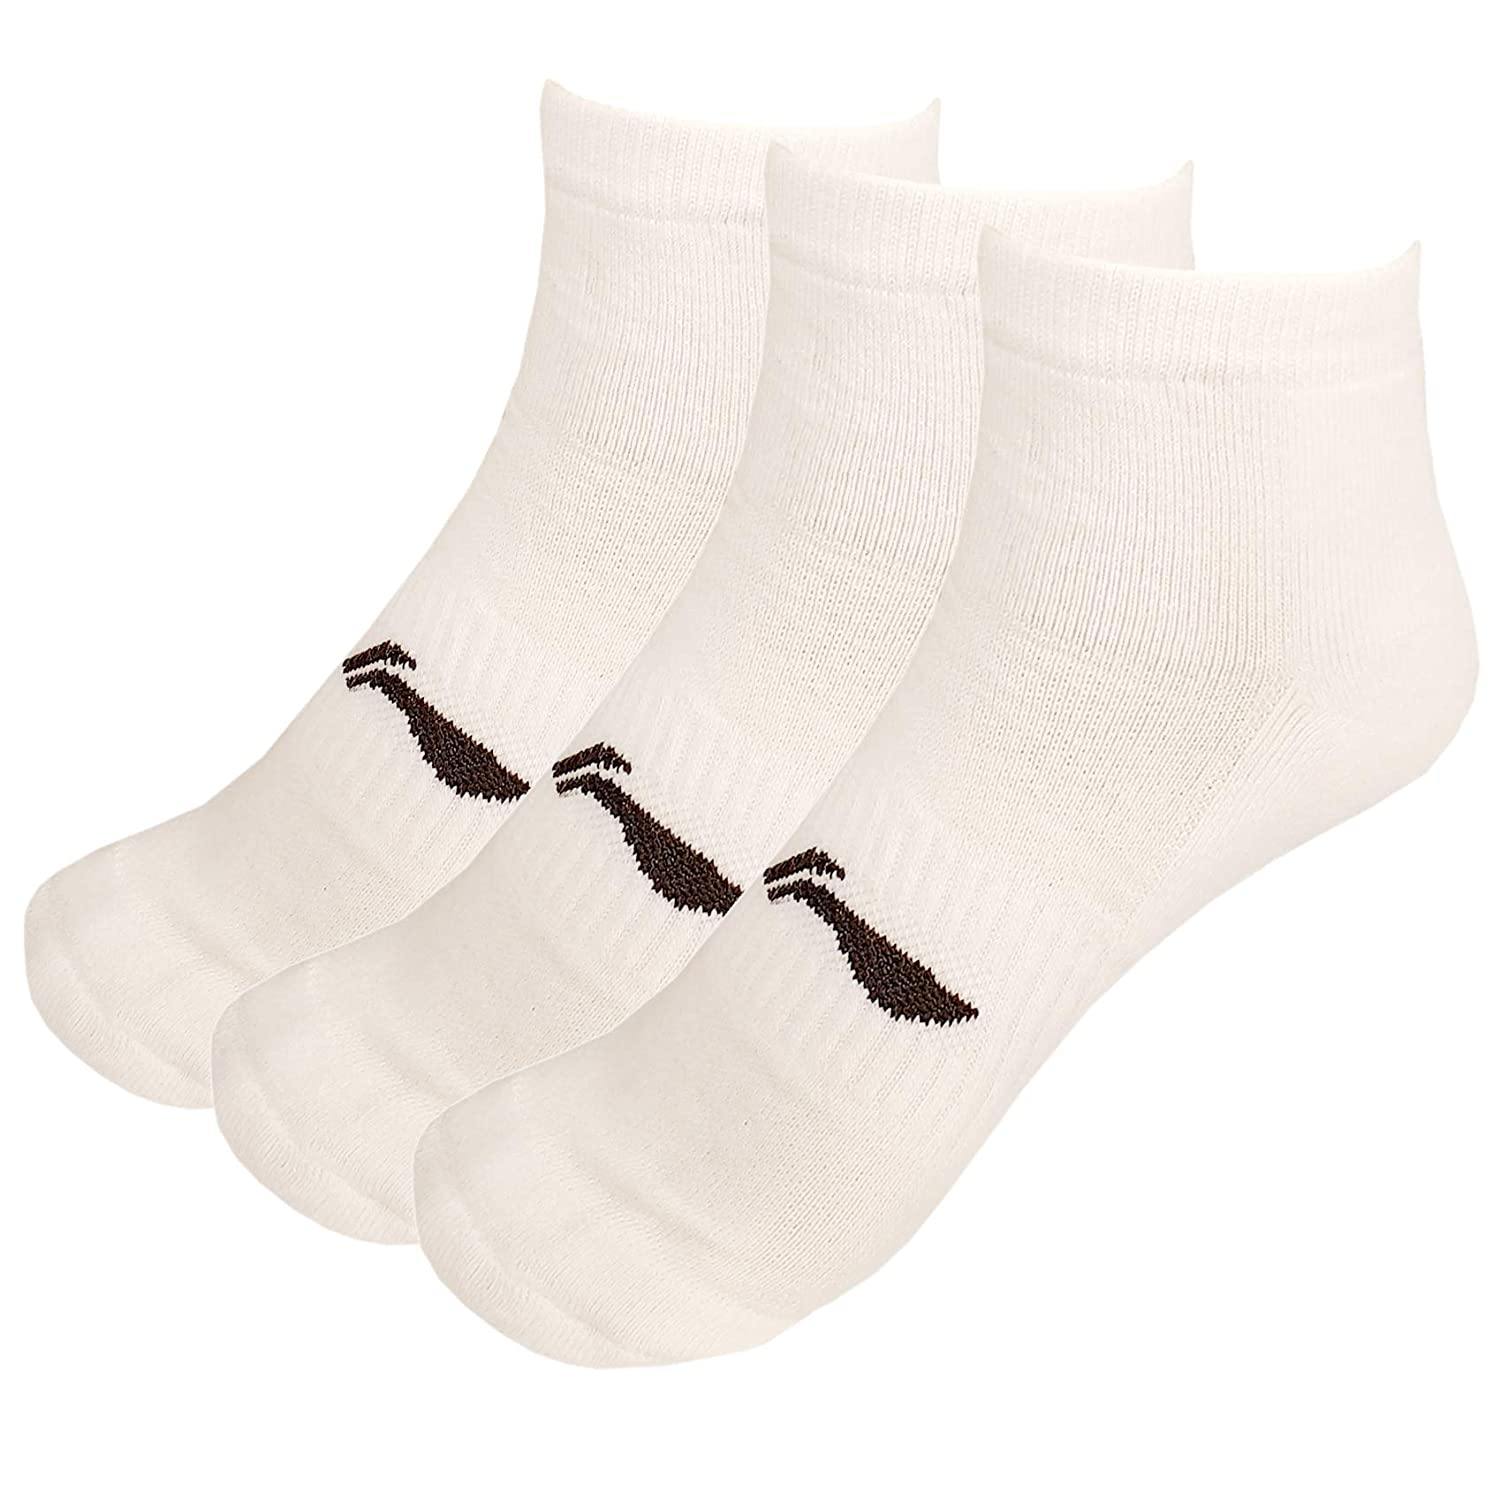 Li-Ning Cotton Men's Sports Socks, Quarter length, Pack of 3, White - Best Price online Prokicksports.com